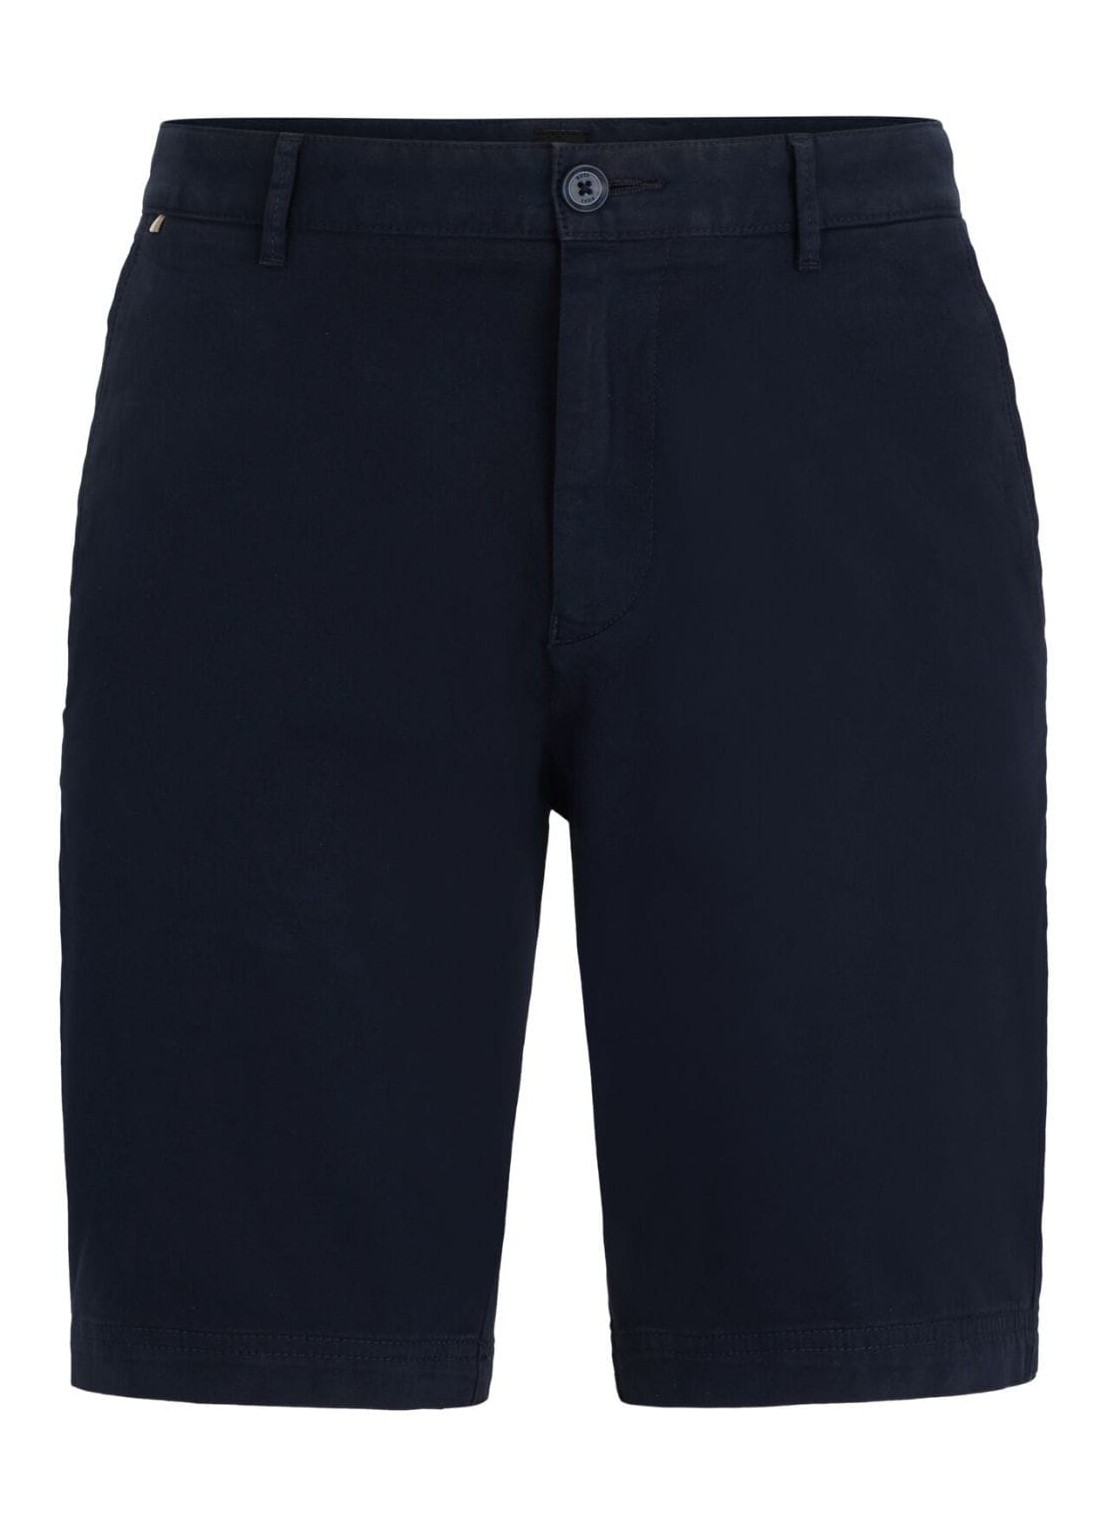 Pantalon corto boss short pant manslice-short - 50512524 404 talla 50
 